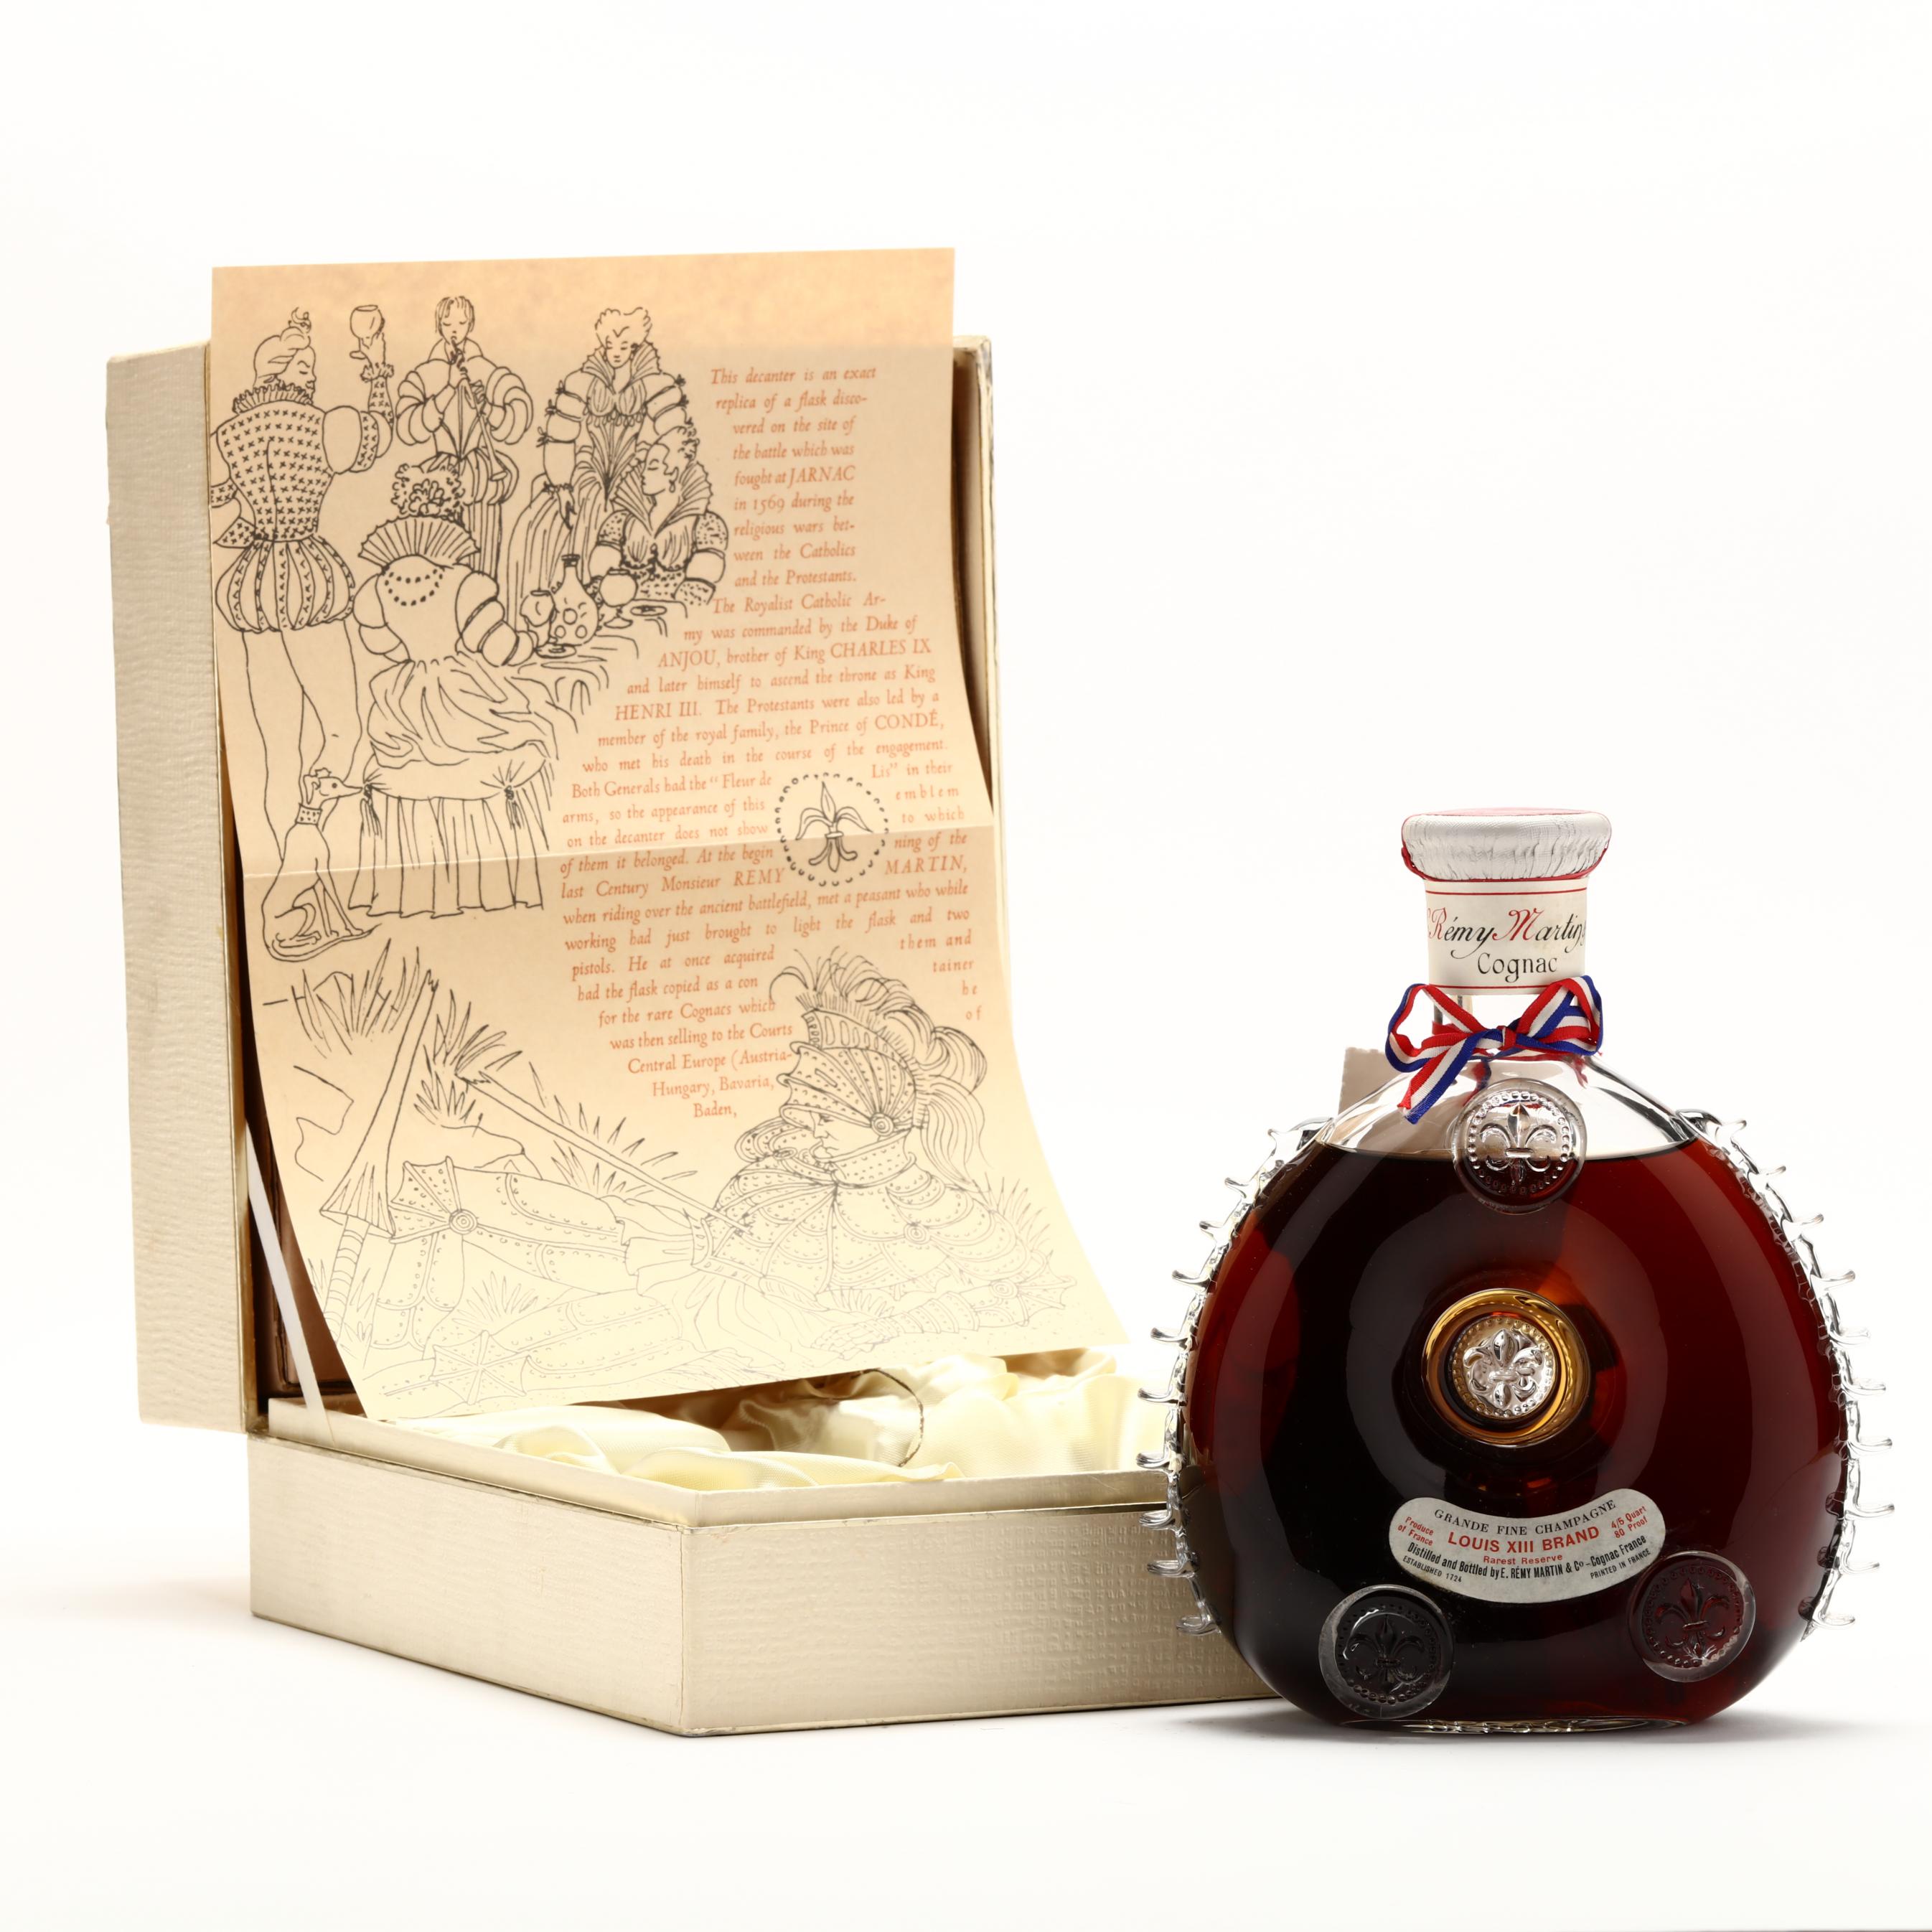 Remy Martin Cognac Grande Fine Champagne Louis XIII brand rarest reserve